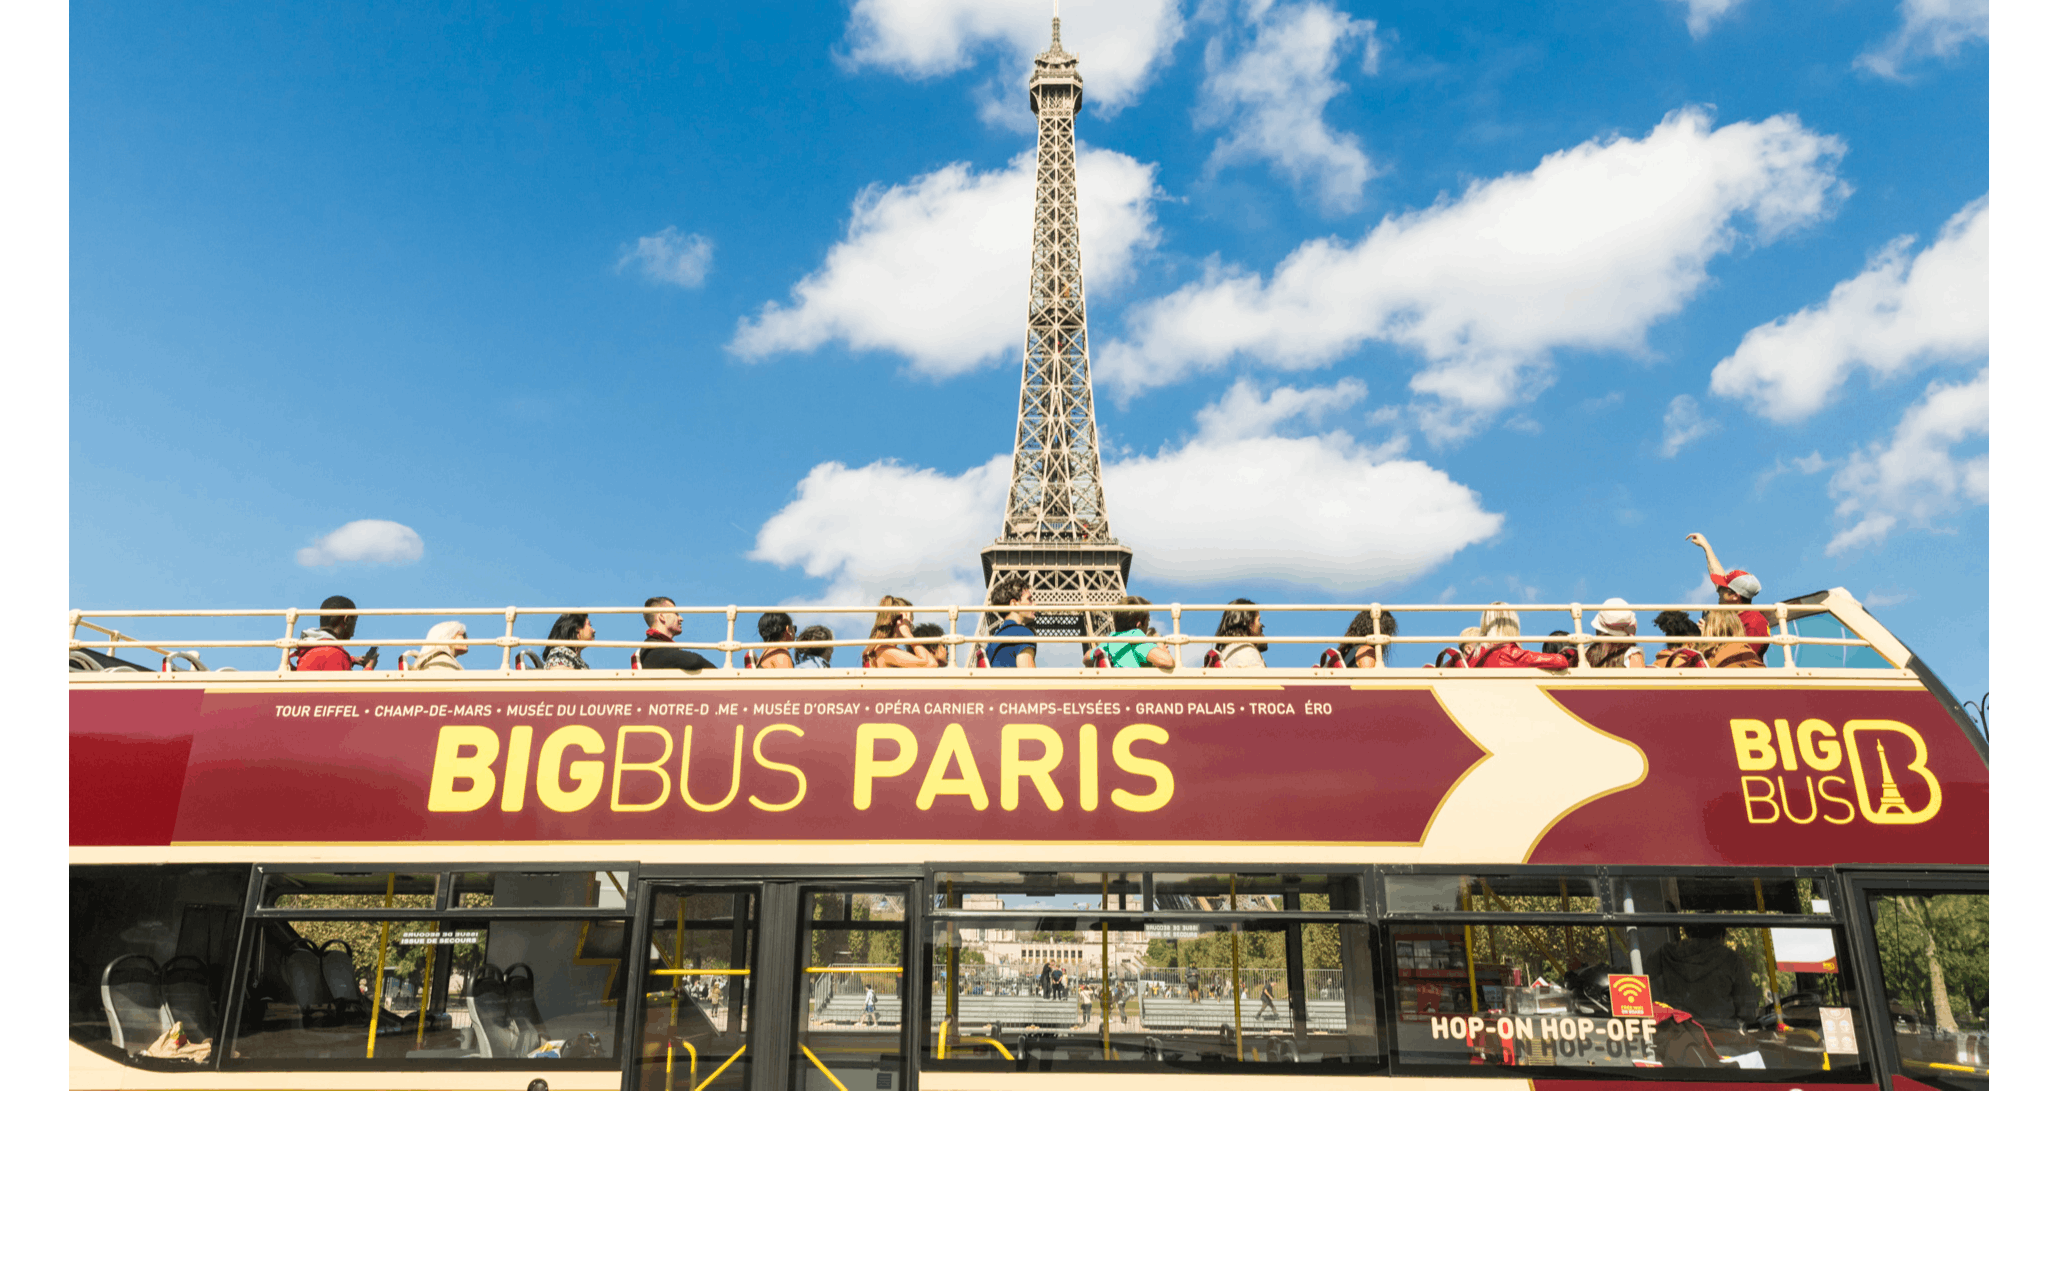 48h hop-on hop-off Big Bus tour of Paris with panoramic river cruise